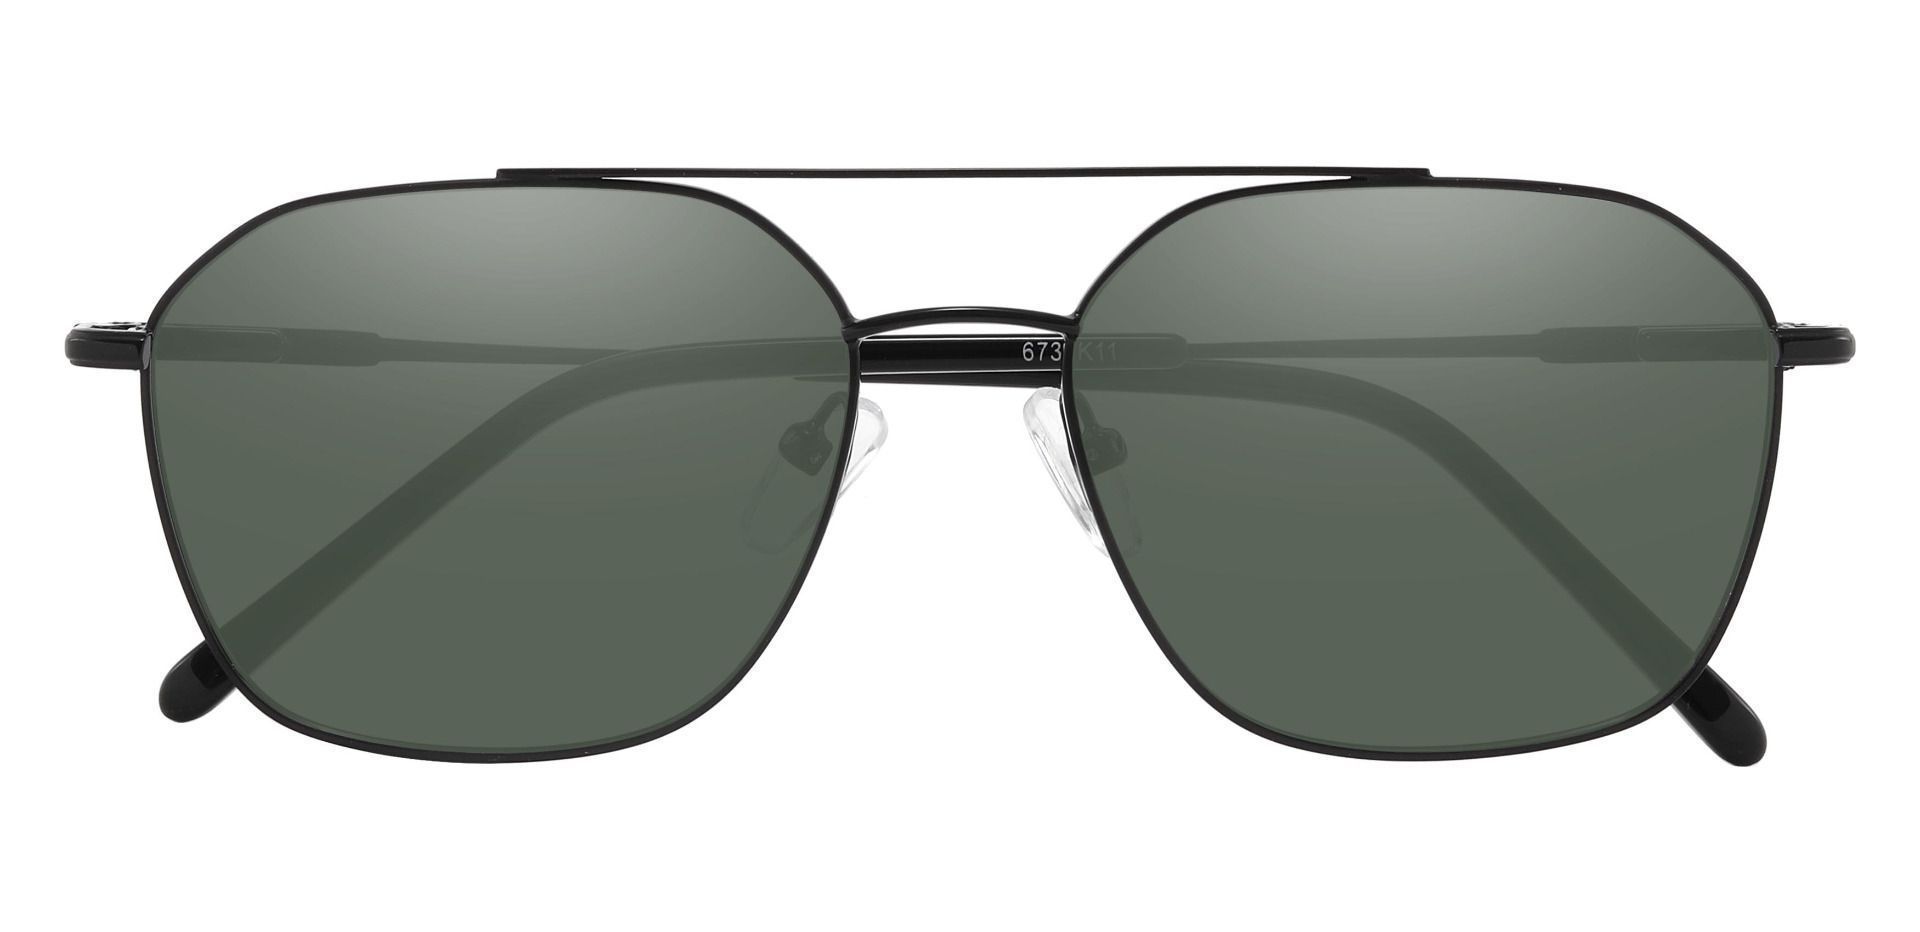 Harvey Aviator Lined Bifocal Sunglasses - Black Frame With Green Lenses